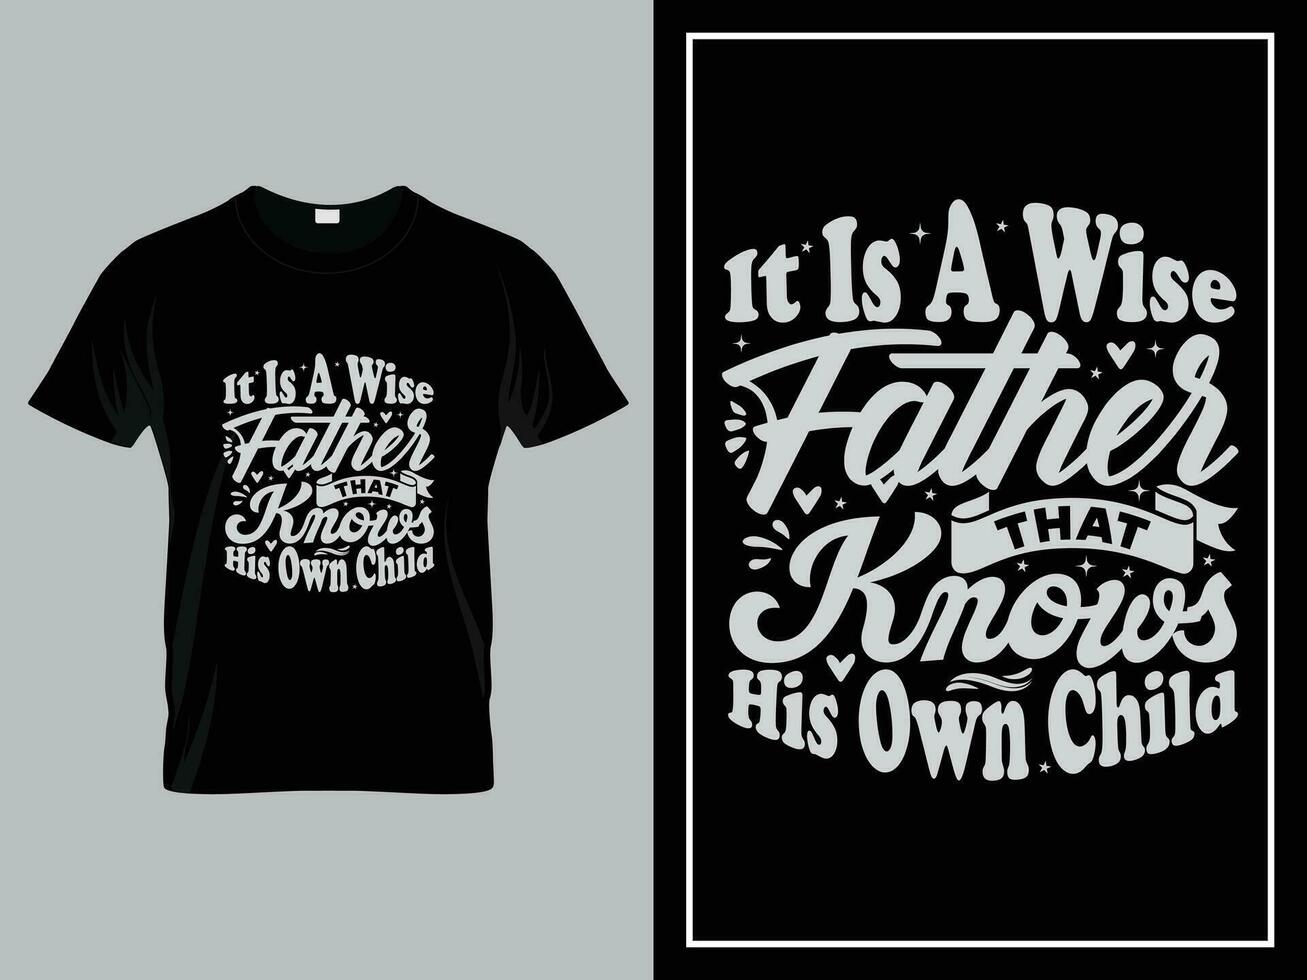 Papa Typografie t Hemd Design, Vaters Tag T-Shirt Design Vektor